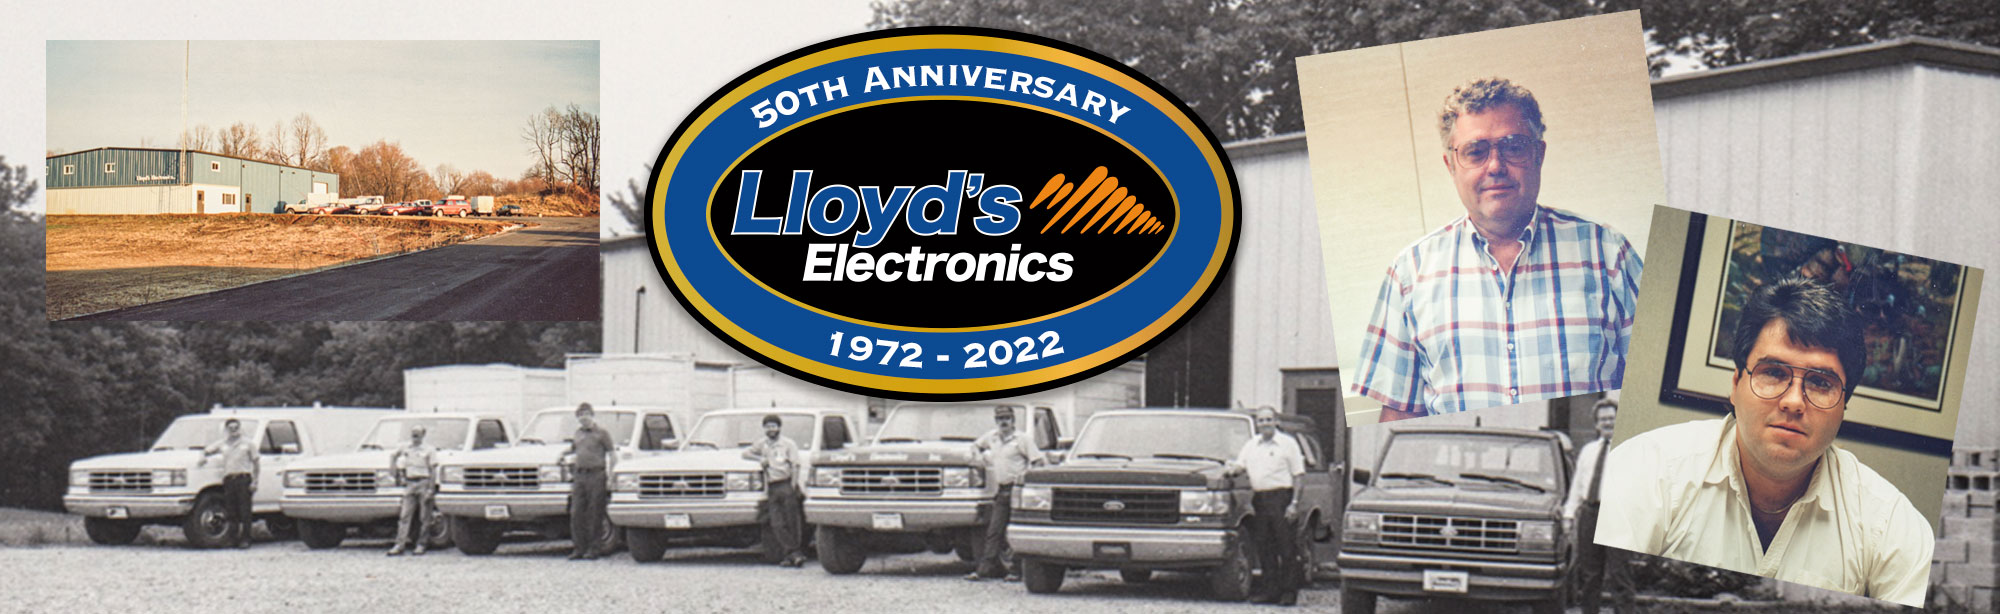 Lloyd's Electronics - About